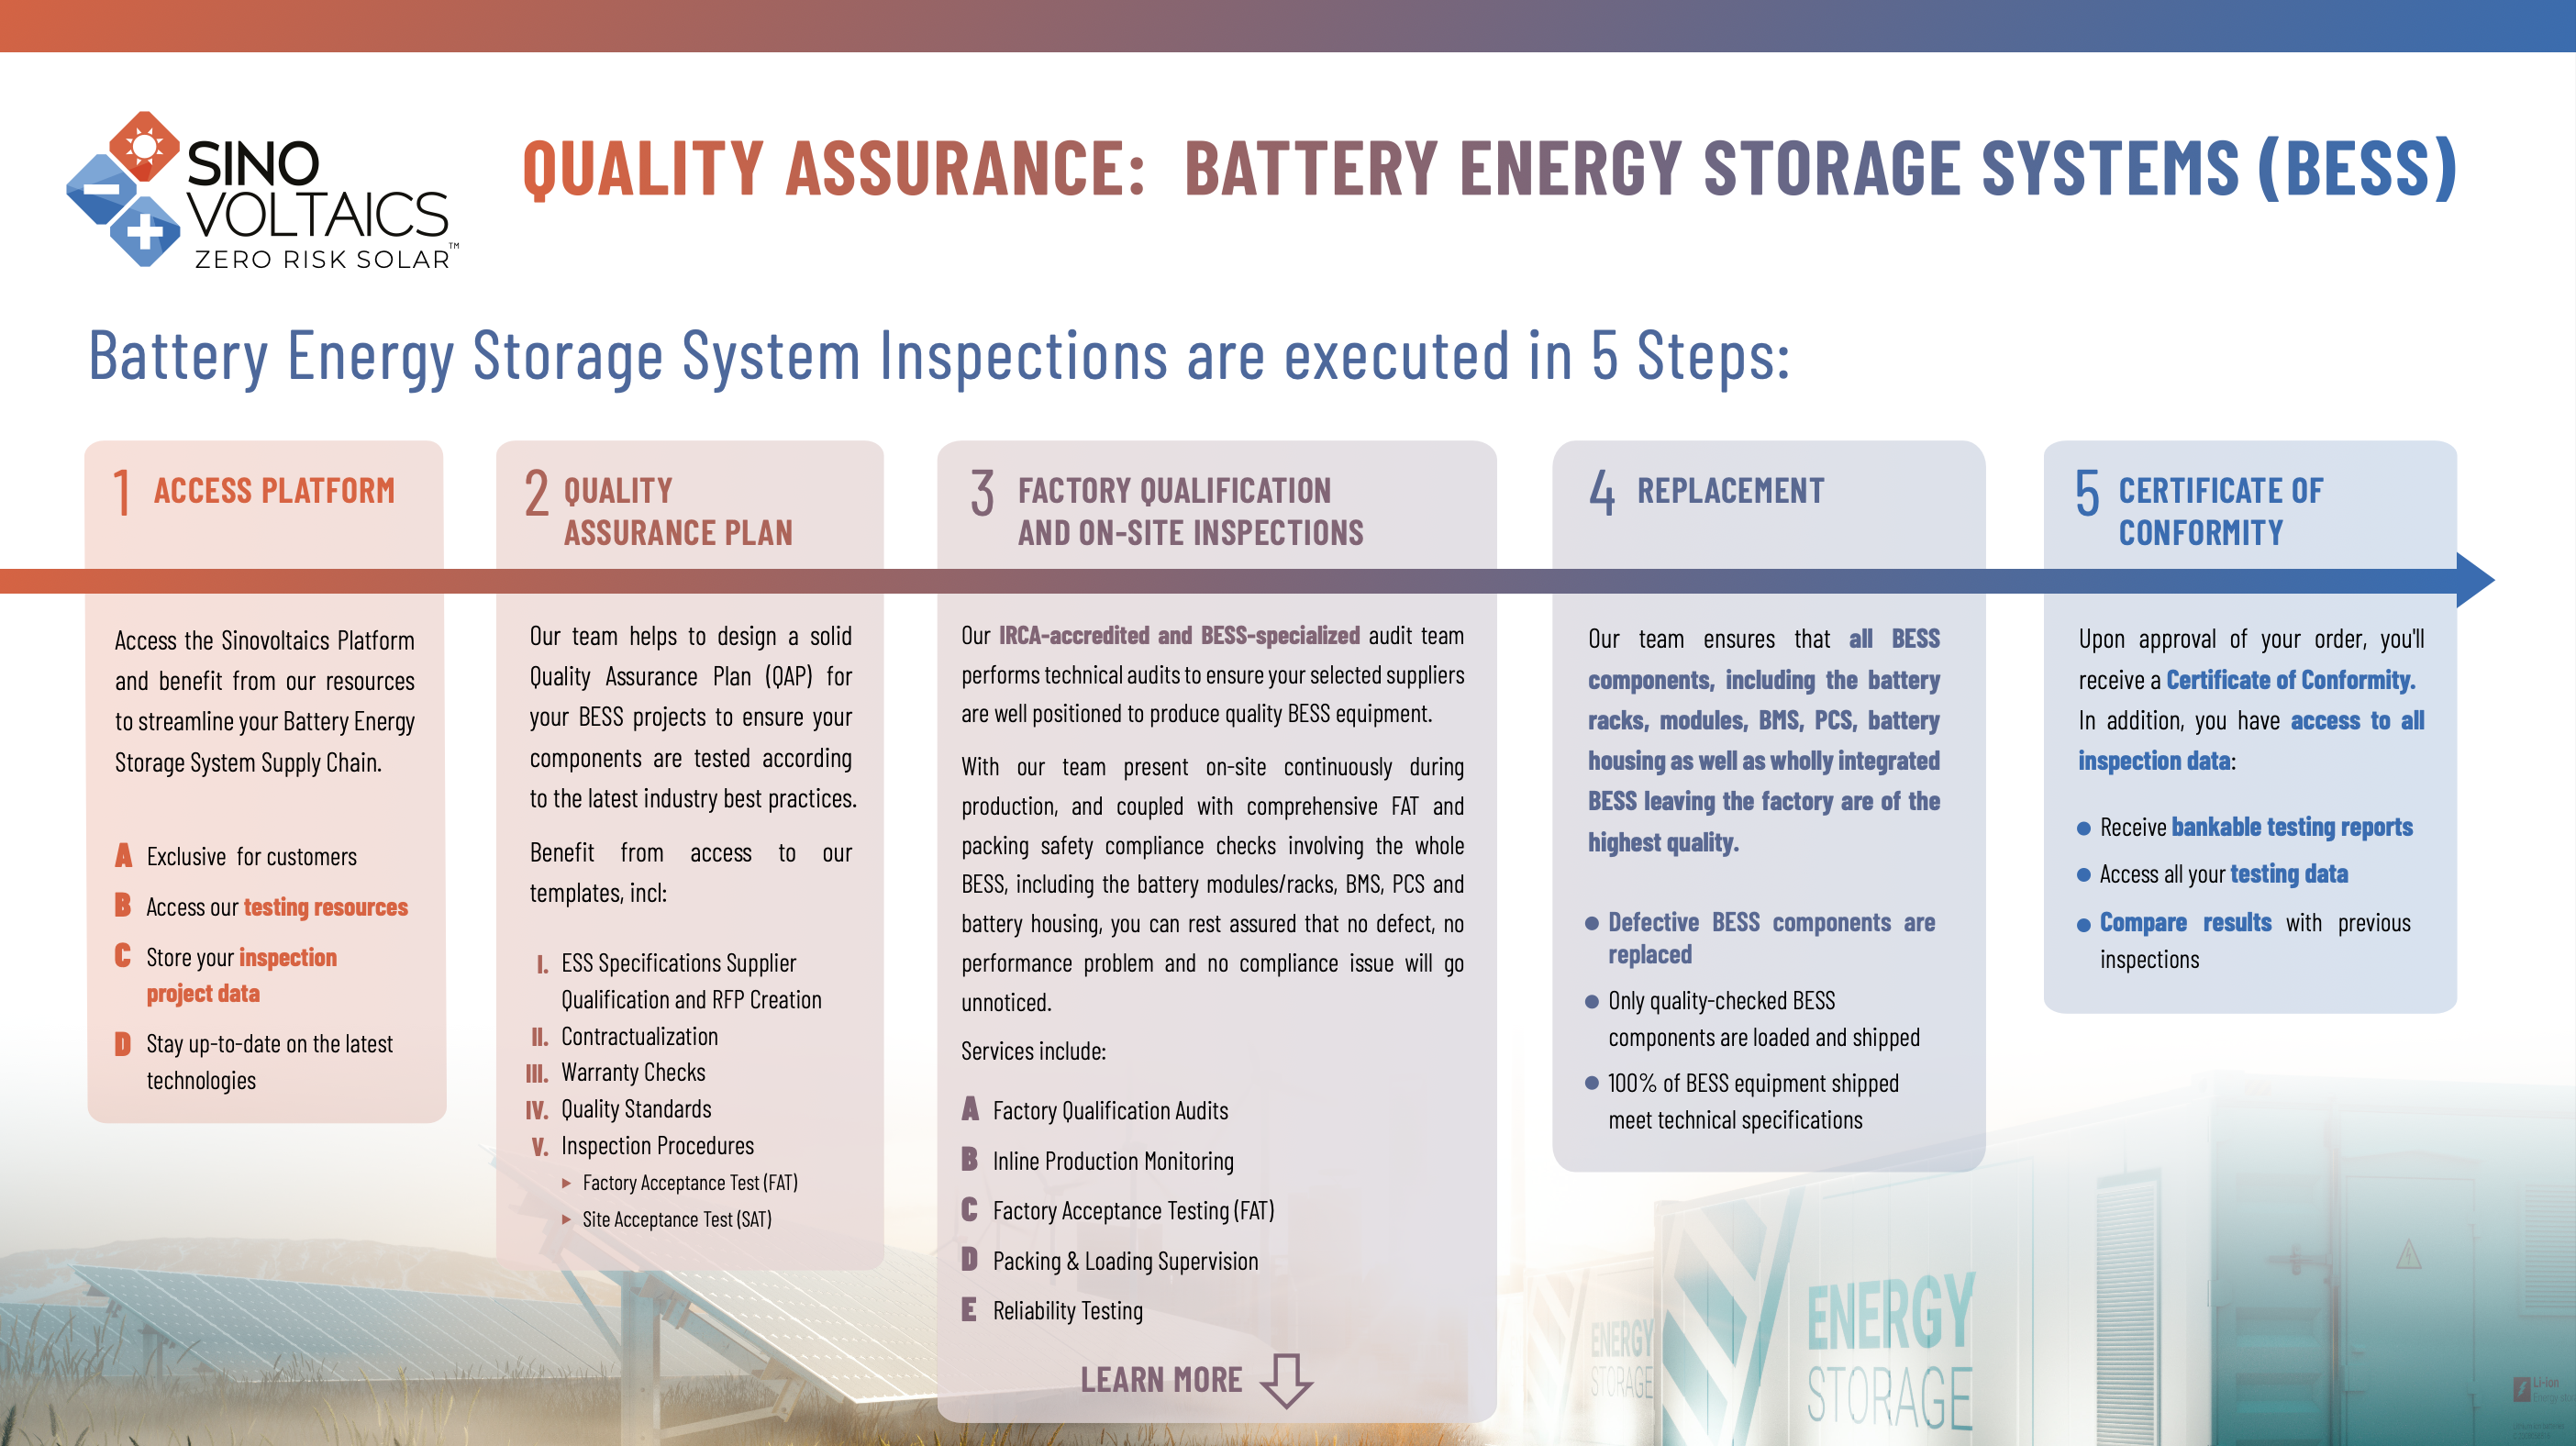 Sinovoltaics Brochure: Quality Assurance - Battery Energy Storage Systems (BESS)